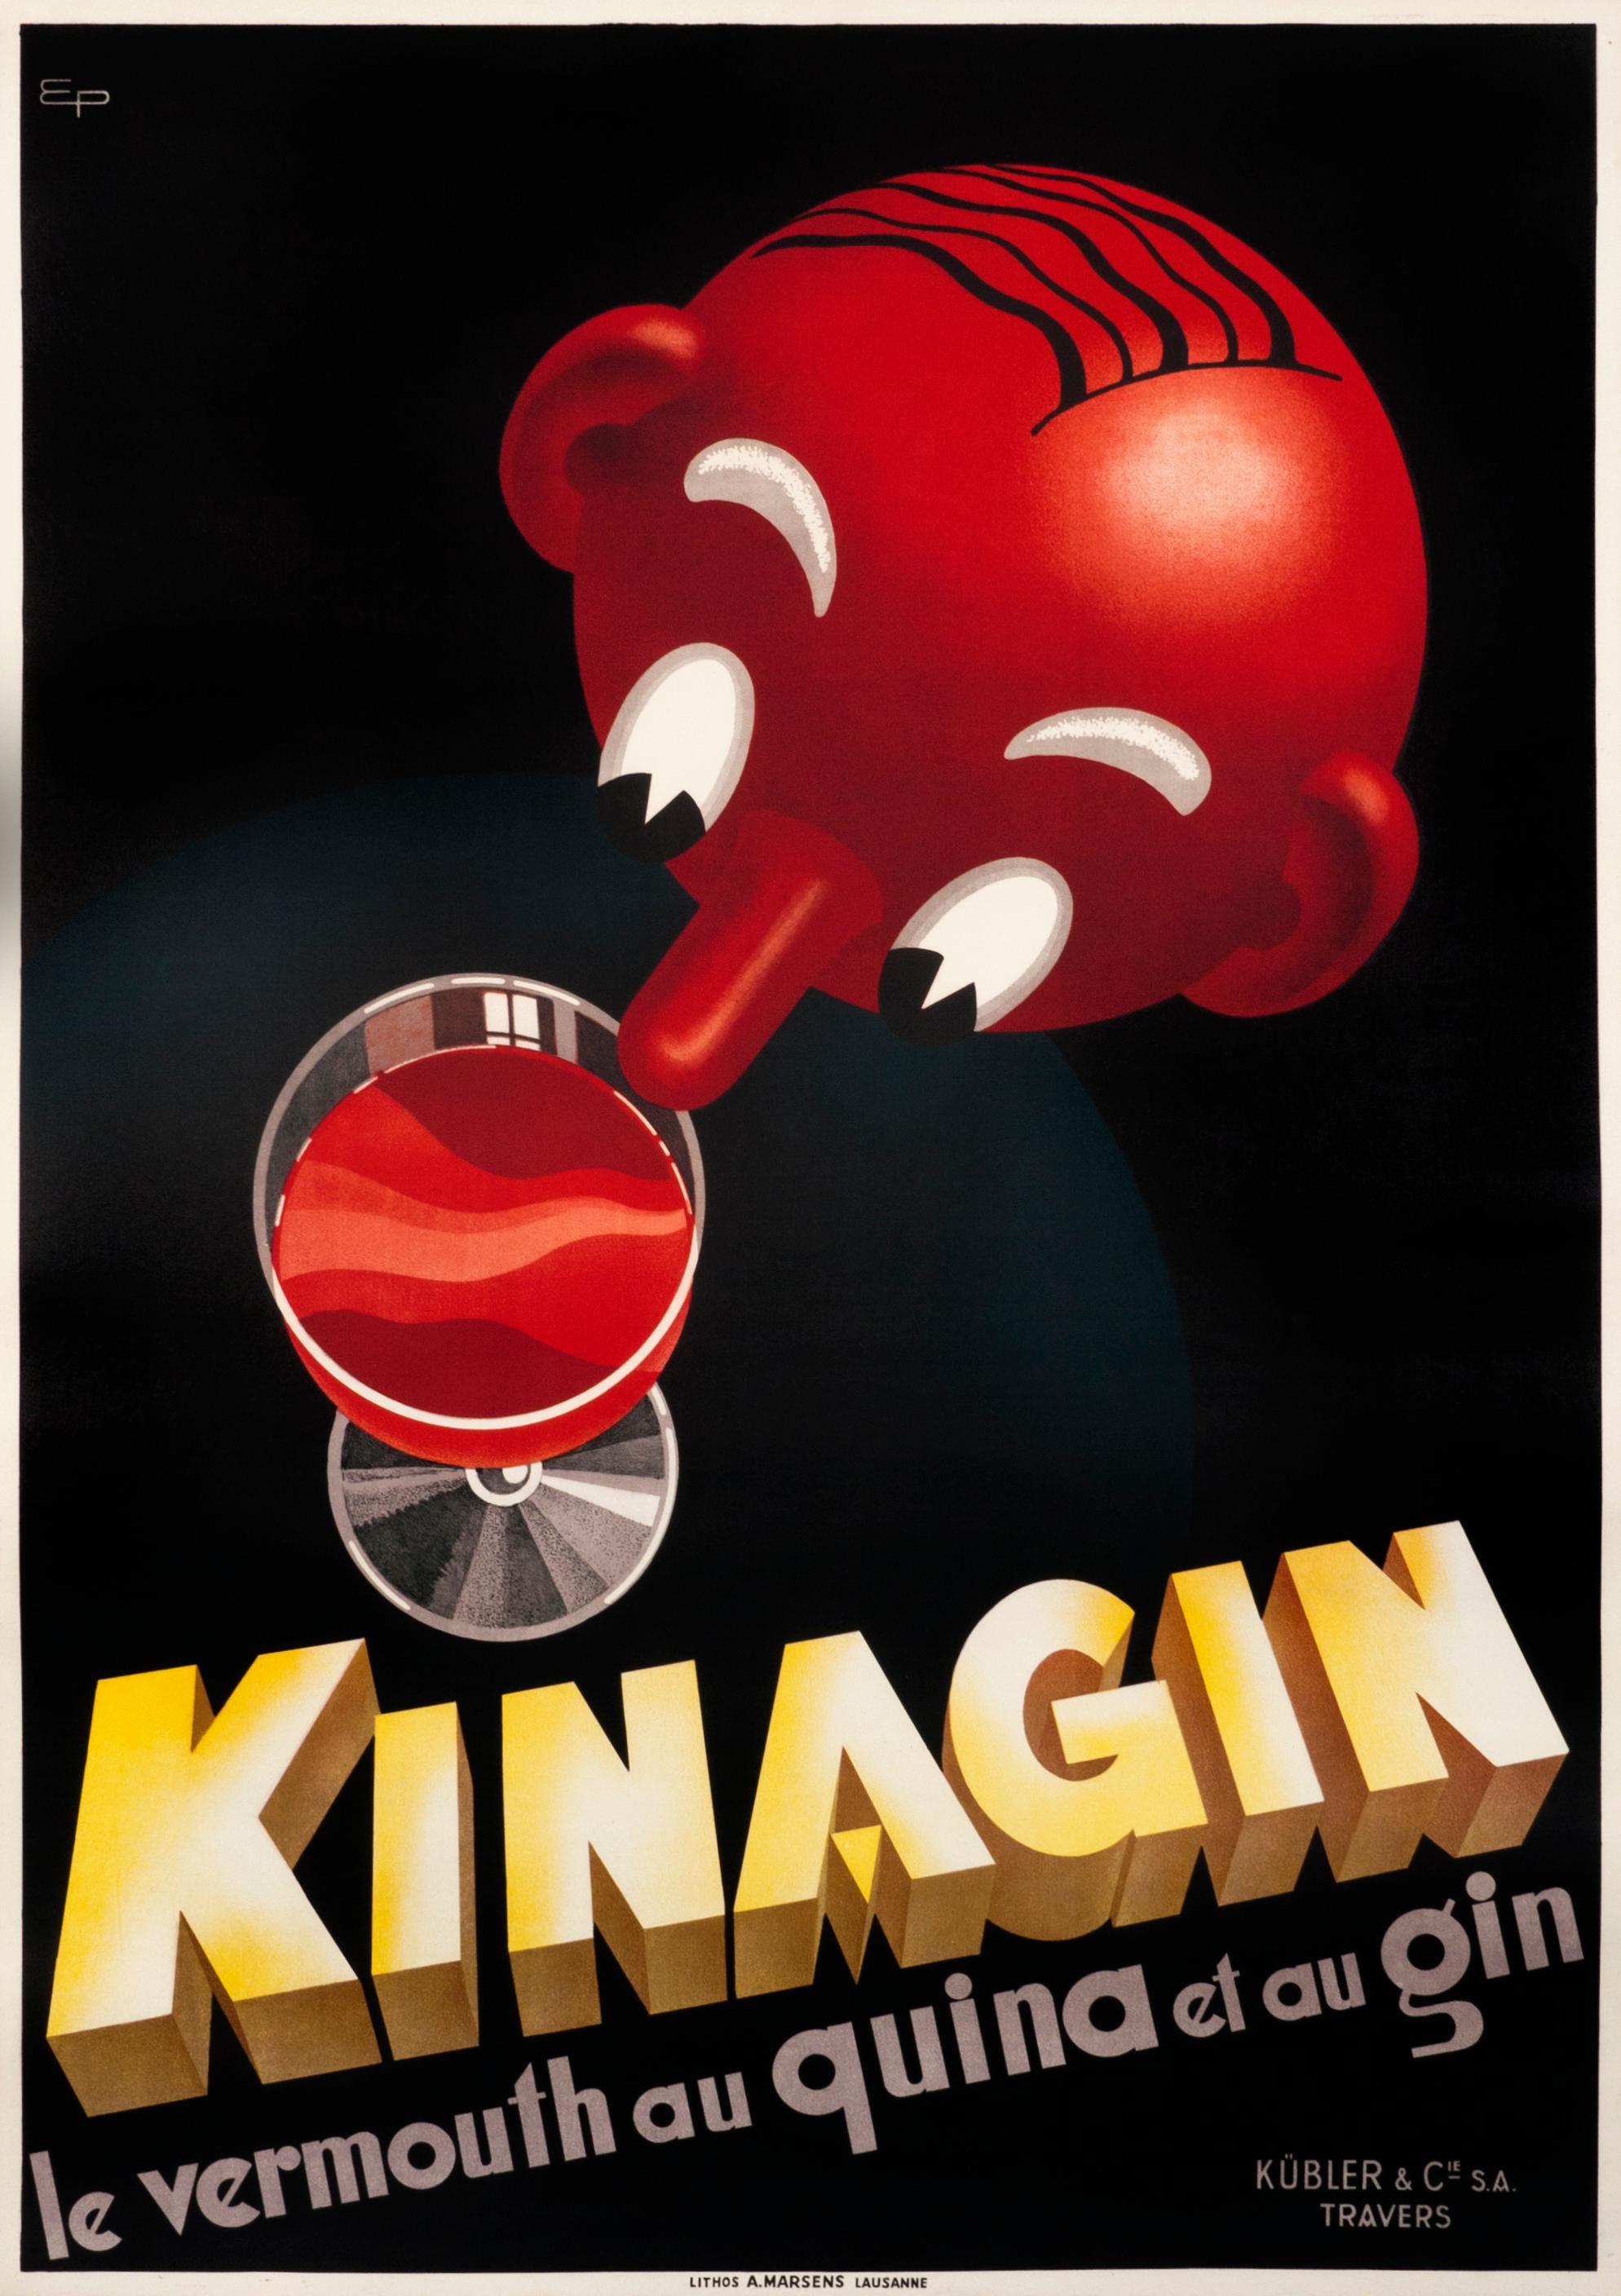 "Kinagin le vermouth au Quina el au Gin" Original Art Deco Spirits Poster - Print by Eugene Patkevich